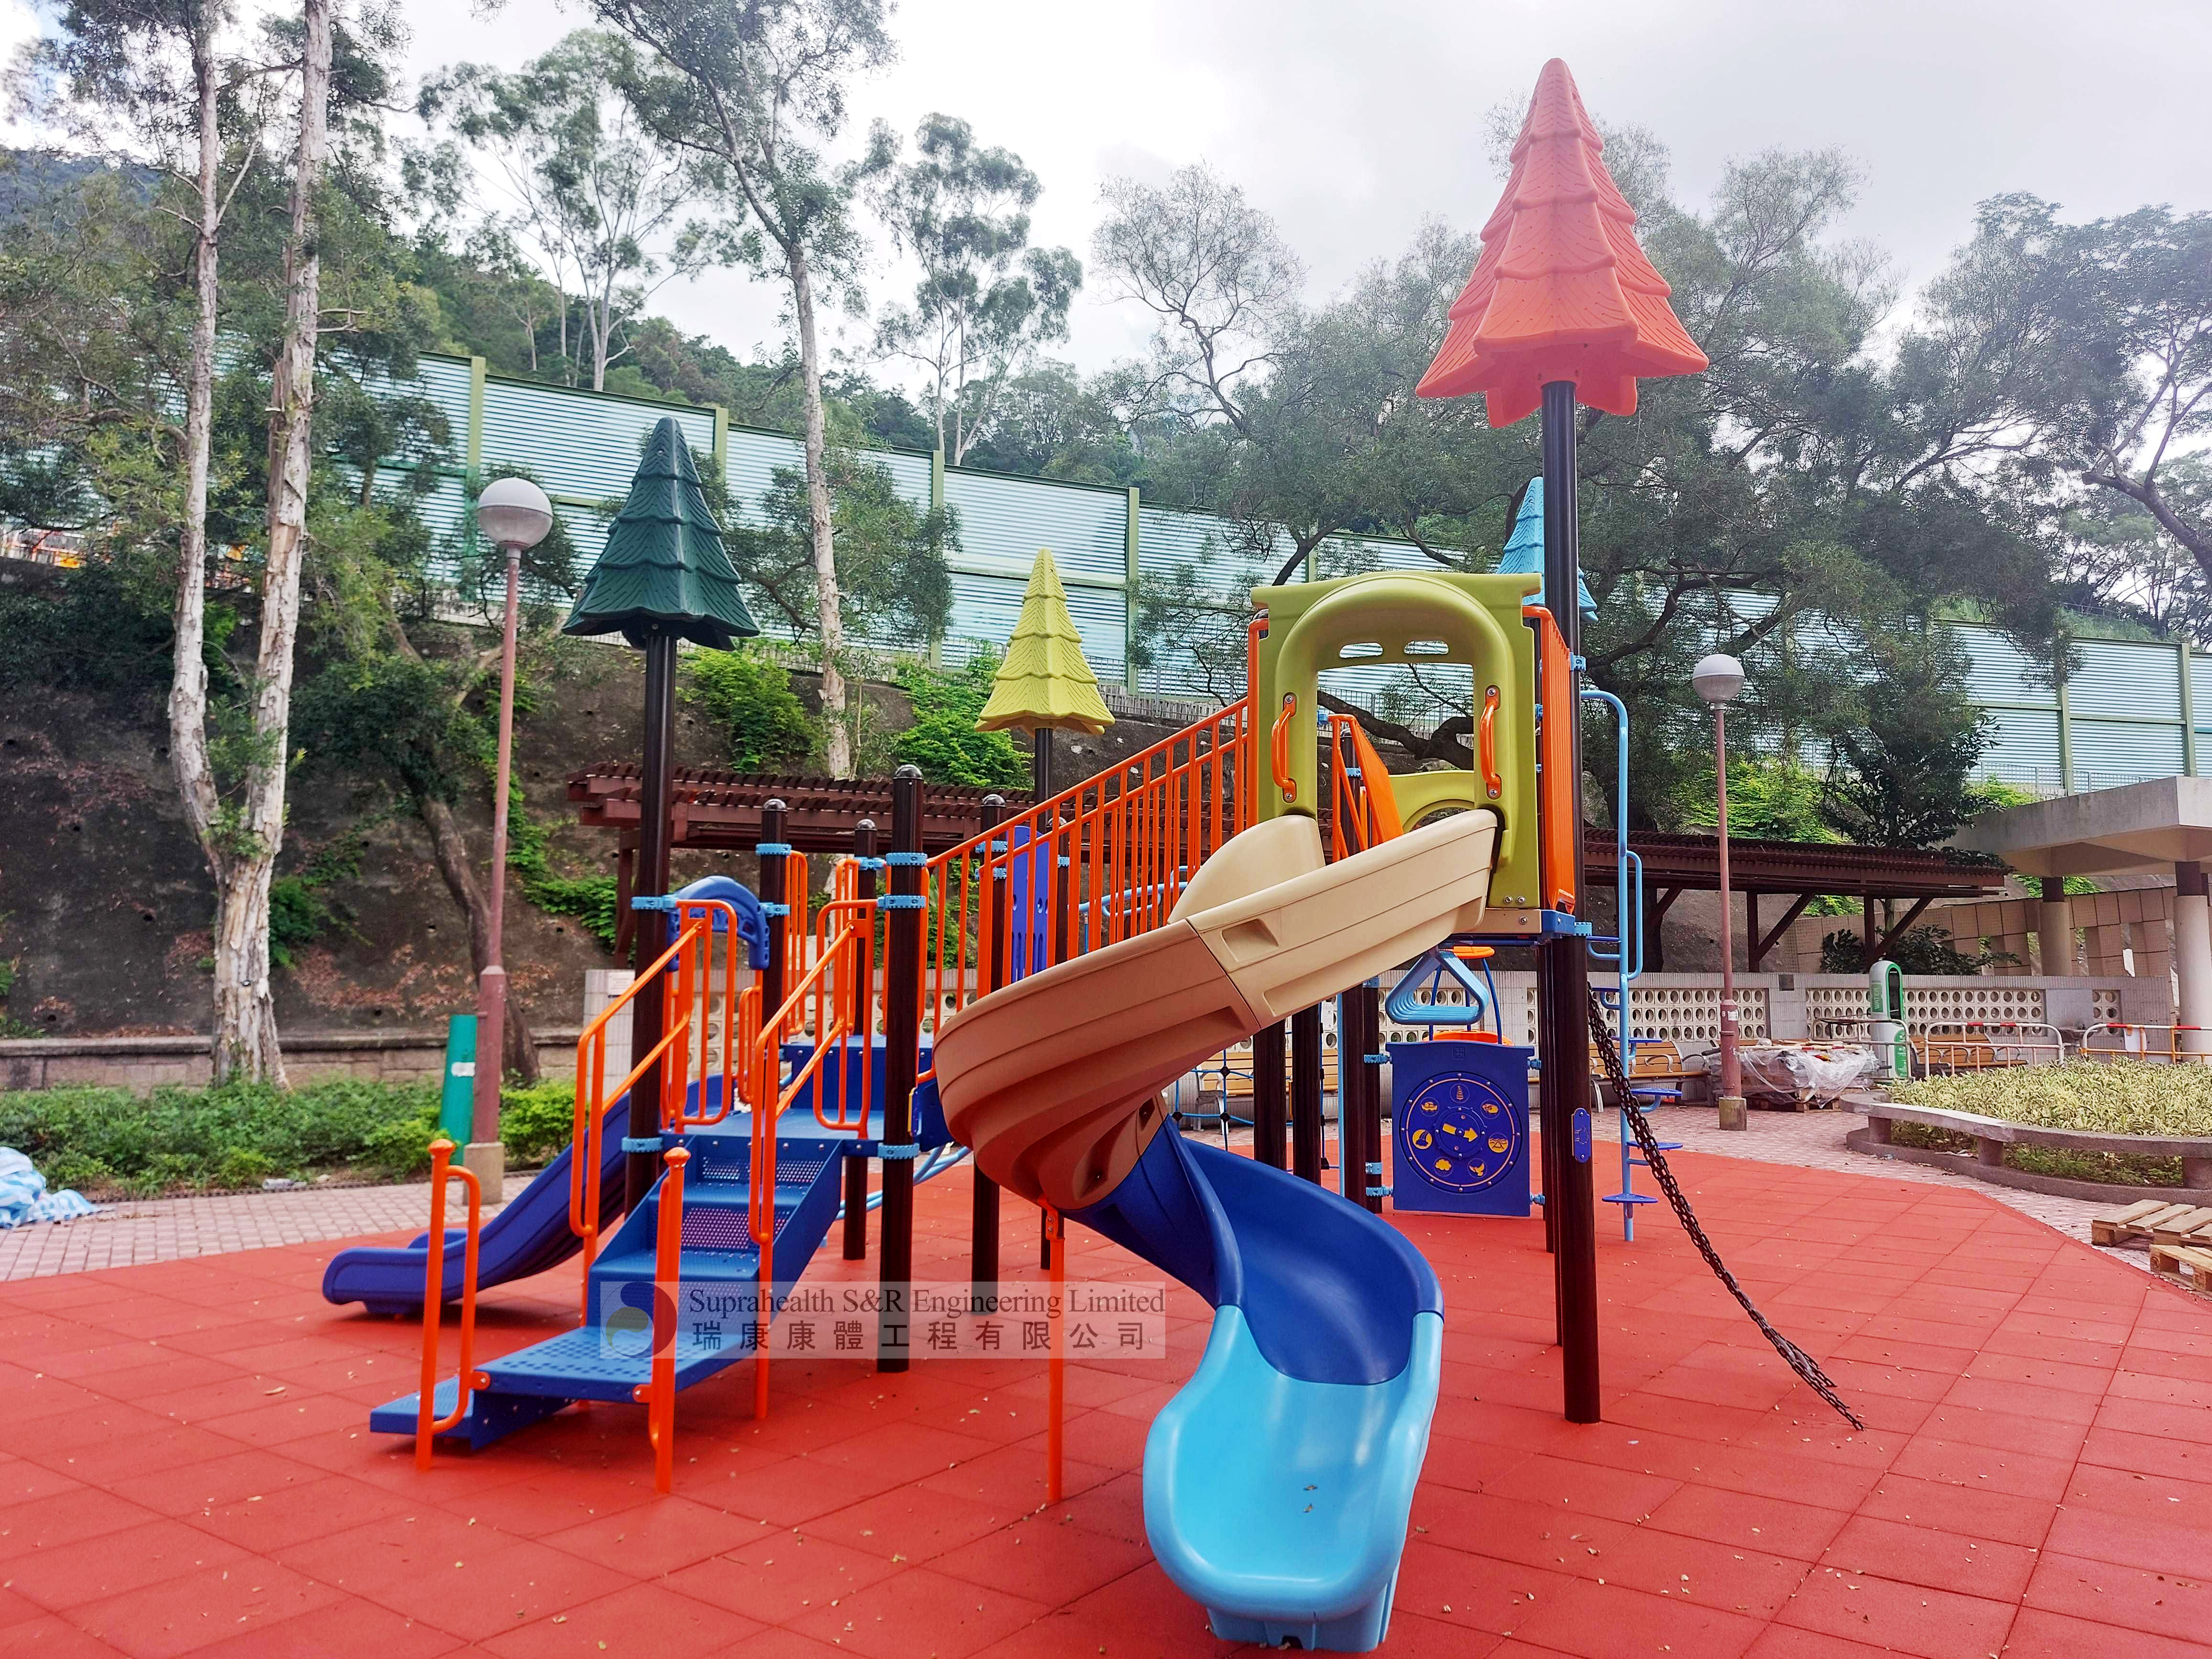 Lung Cheung Road Playground